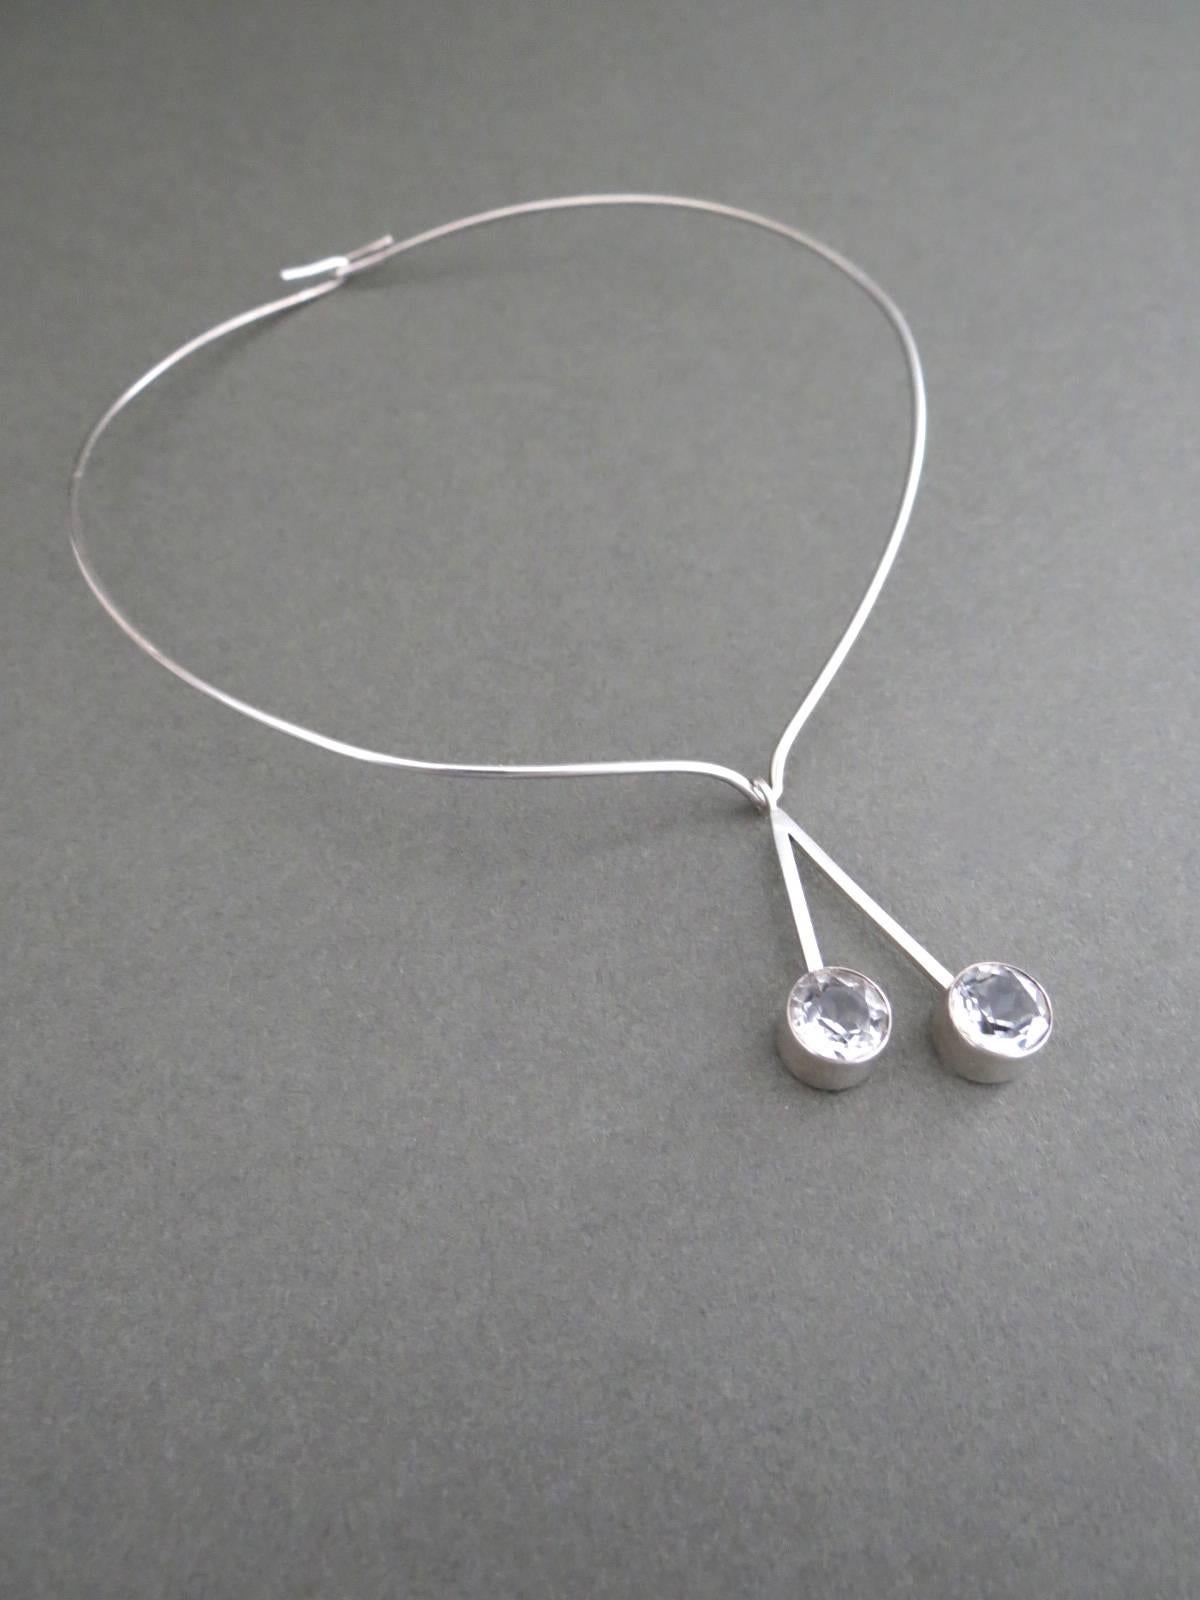 Vintage Danish Mid Century Silver Quartz Modernist Pendant Necklace Choker .
The choker is hallmarked.
Item Specifics
Height: 13cm (approx 5.00